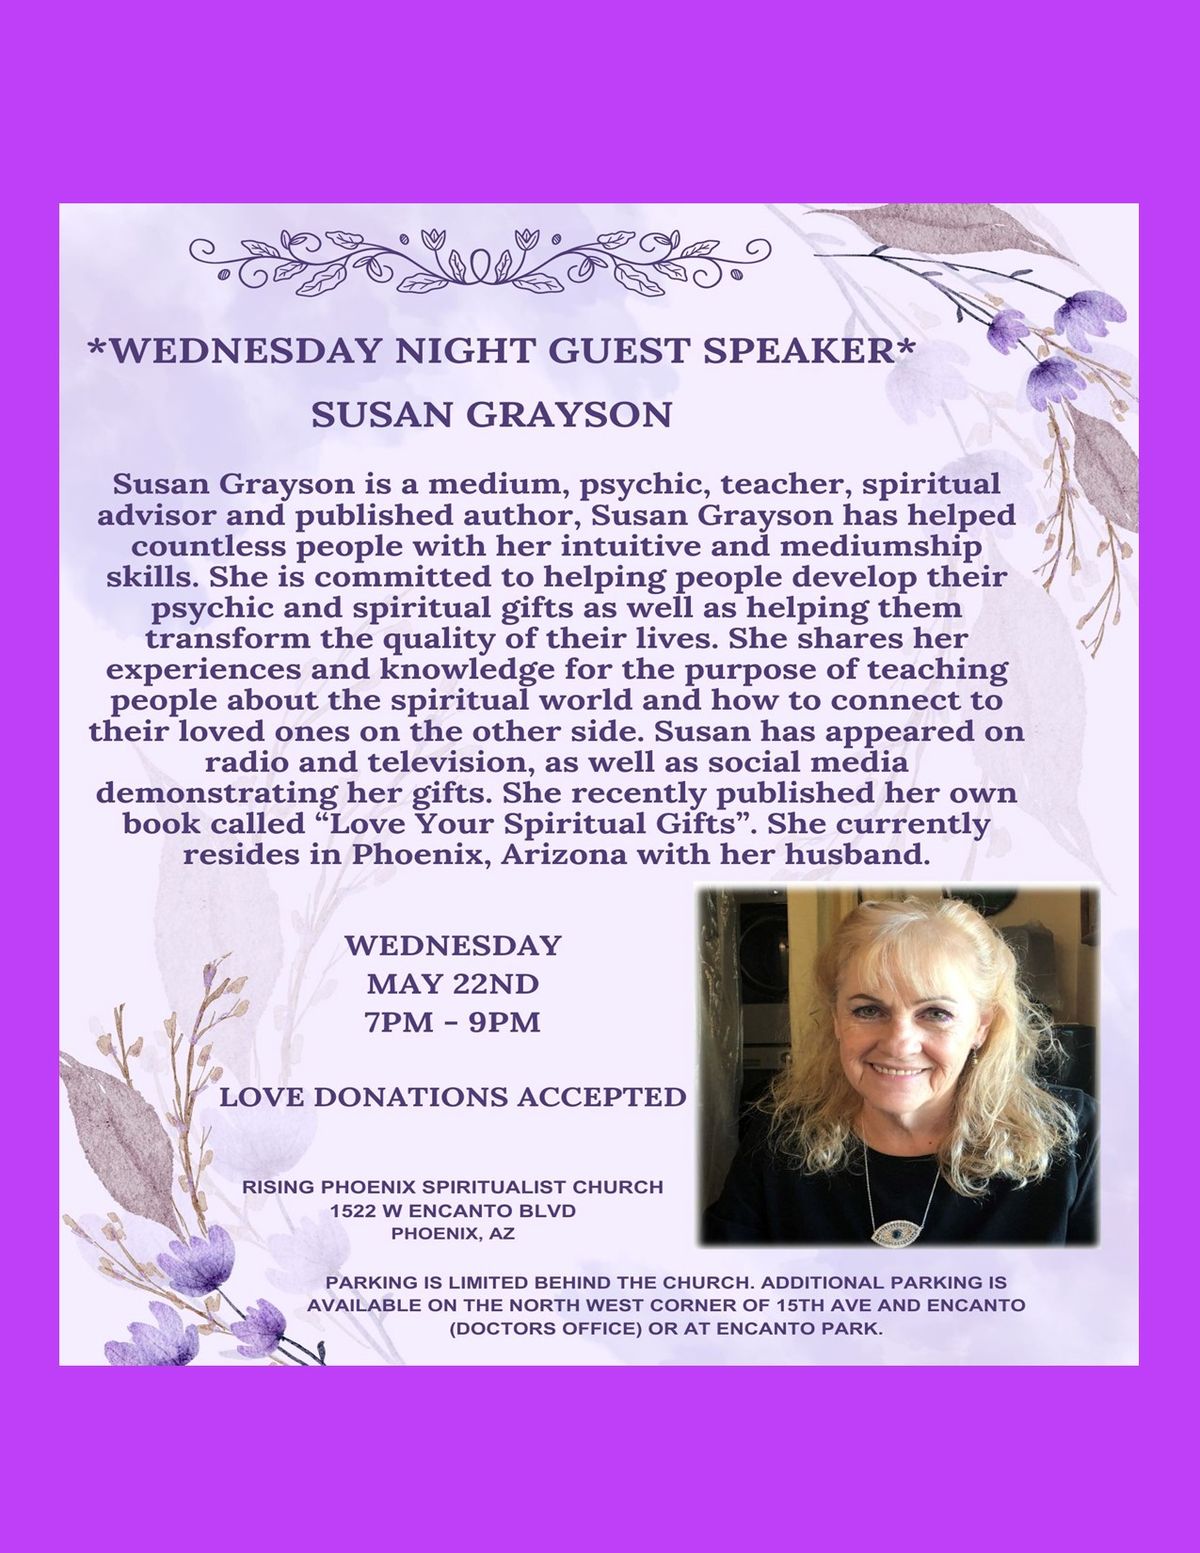 WEDNESDAY NIGHT GUEST SPEAKER SUSAN GRAYSON